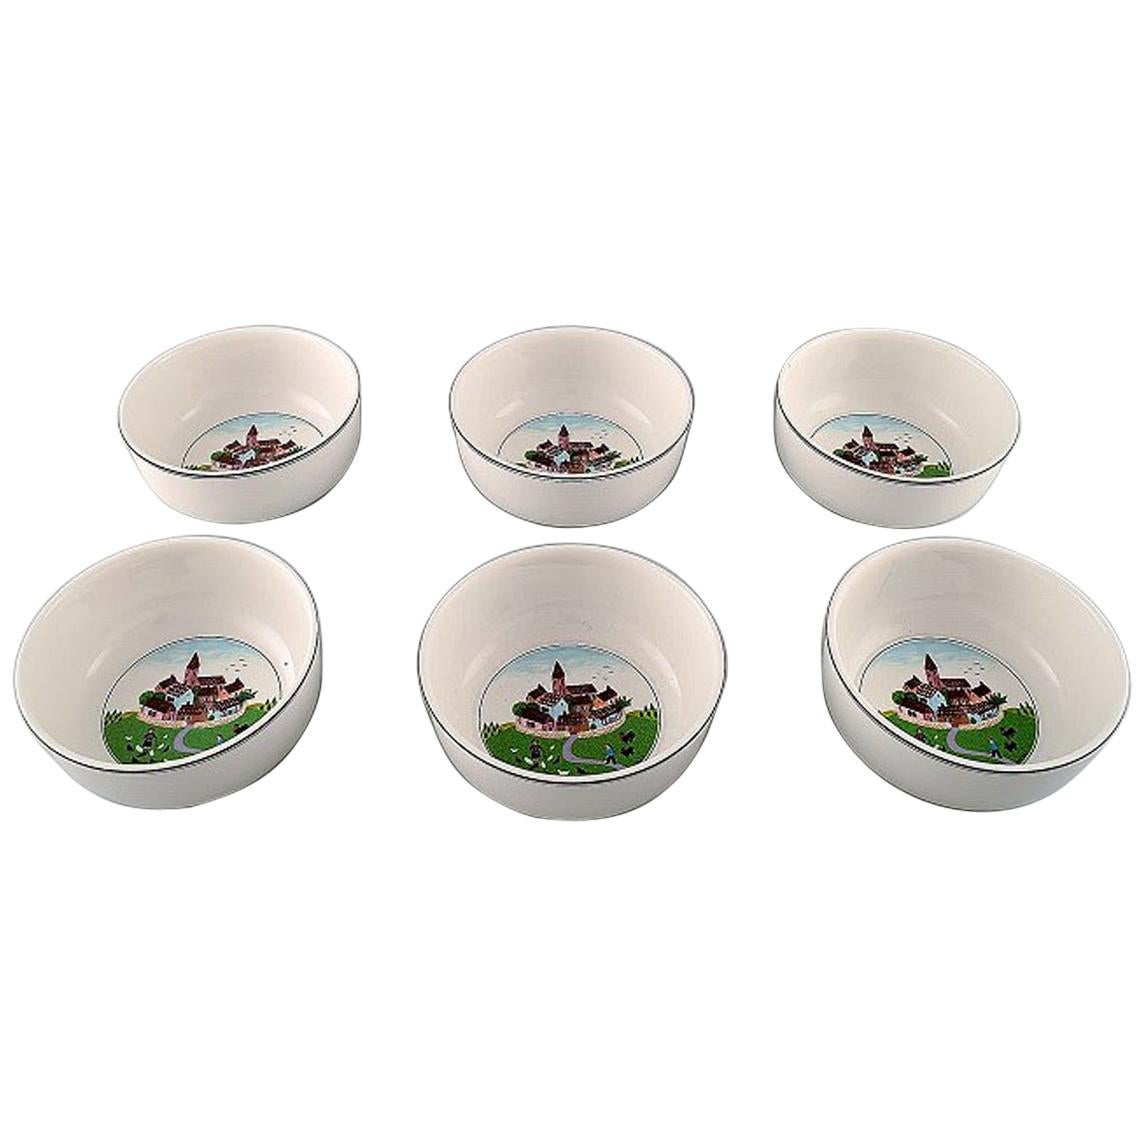 Villeroy & Boch Naif Dinner Service in Porcelain, a Set of 6 Bowls